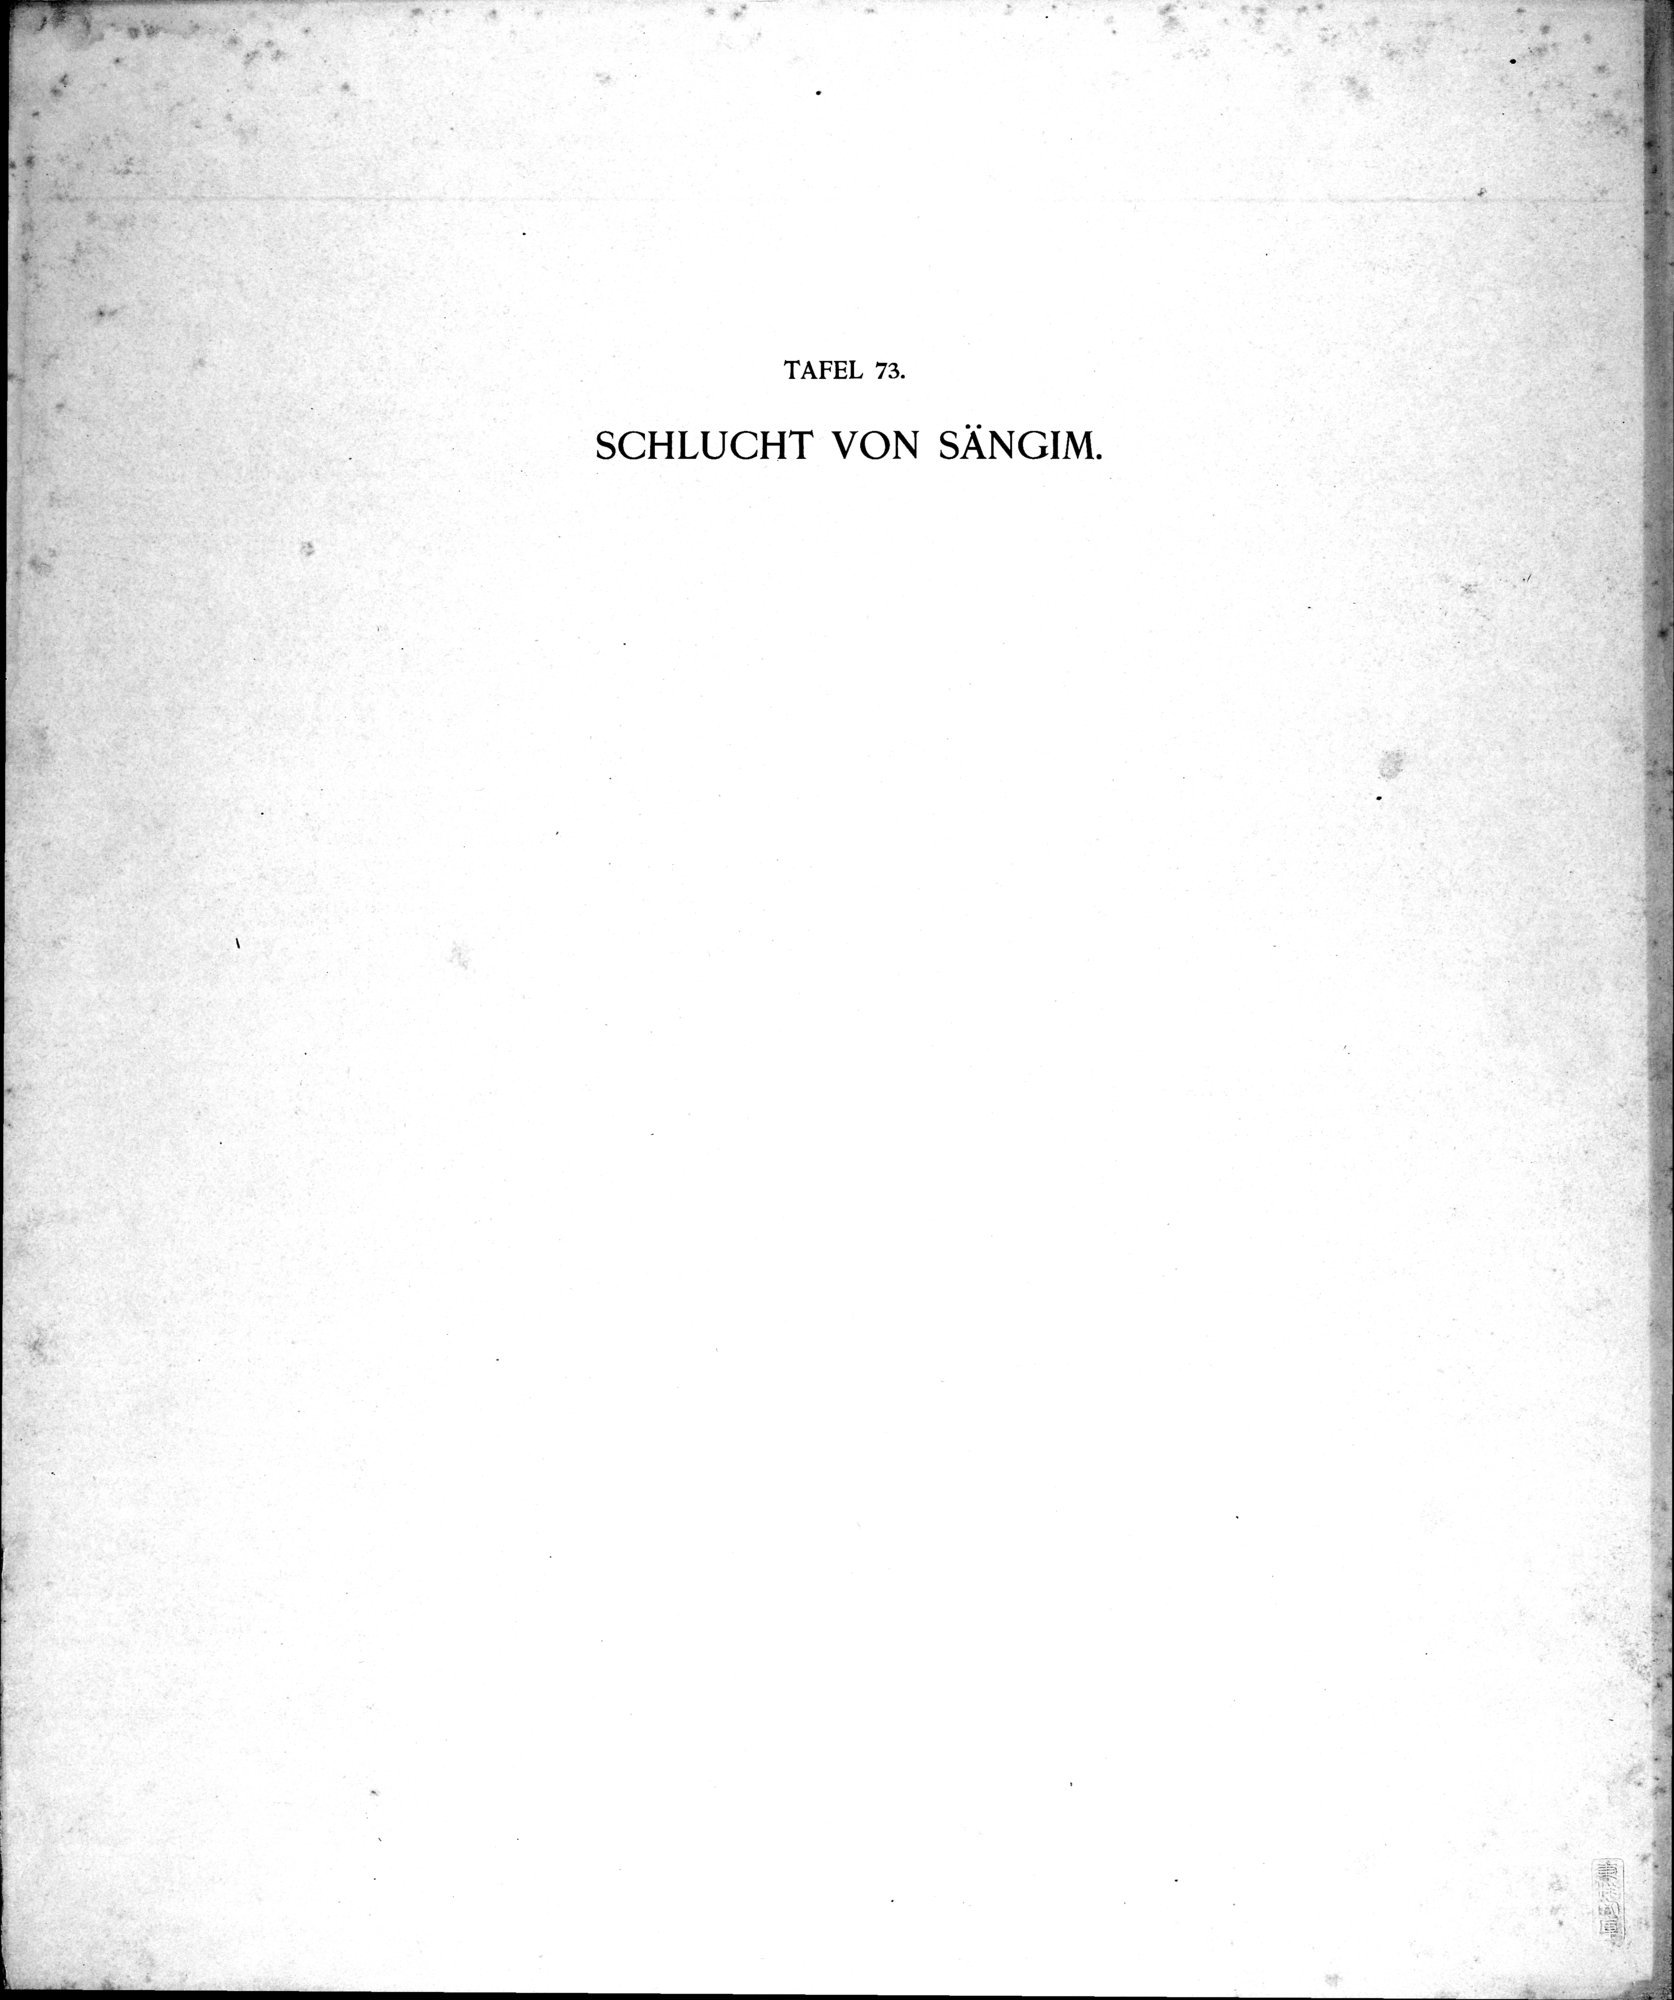 Chotscho : vol.1 / 243 ページ（白黒高解像度画像）